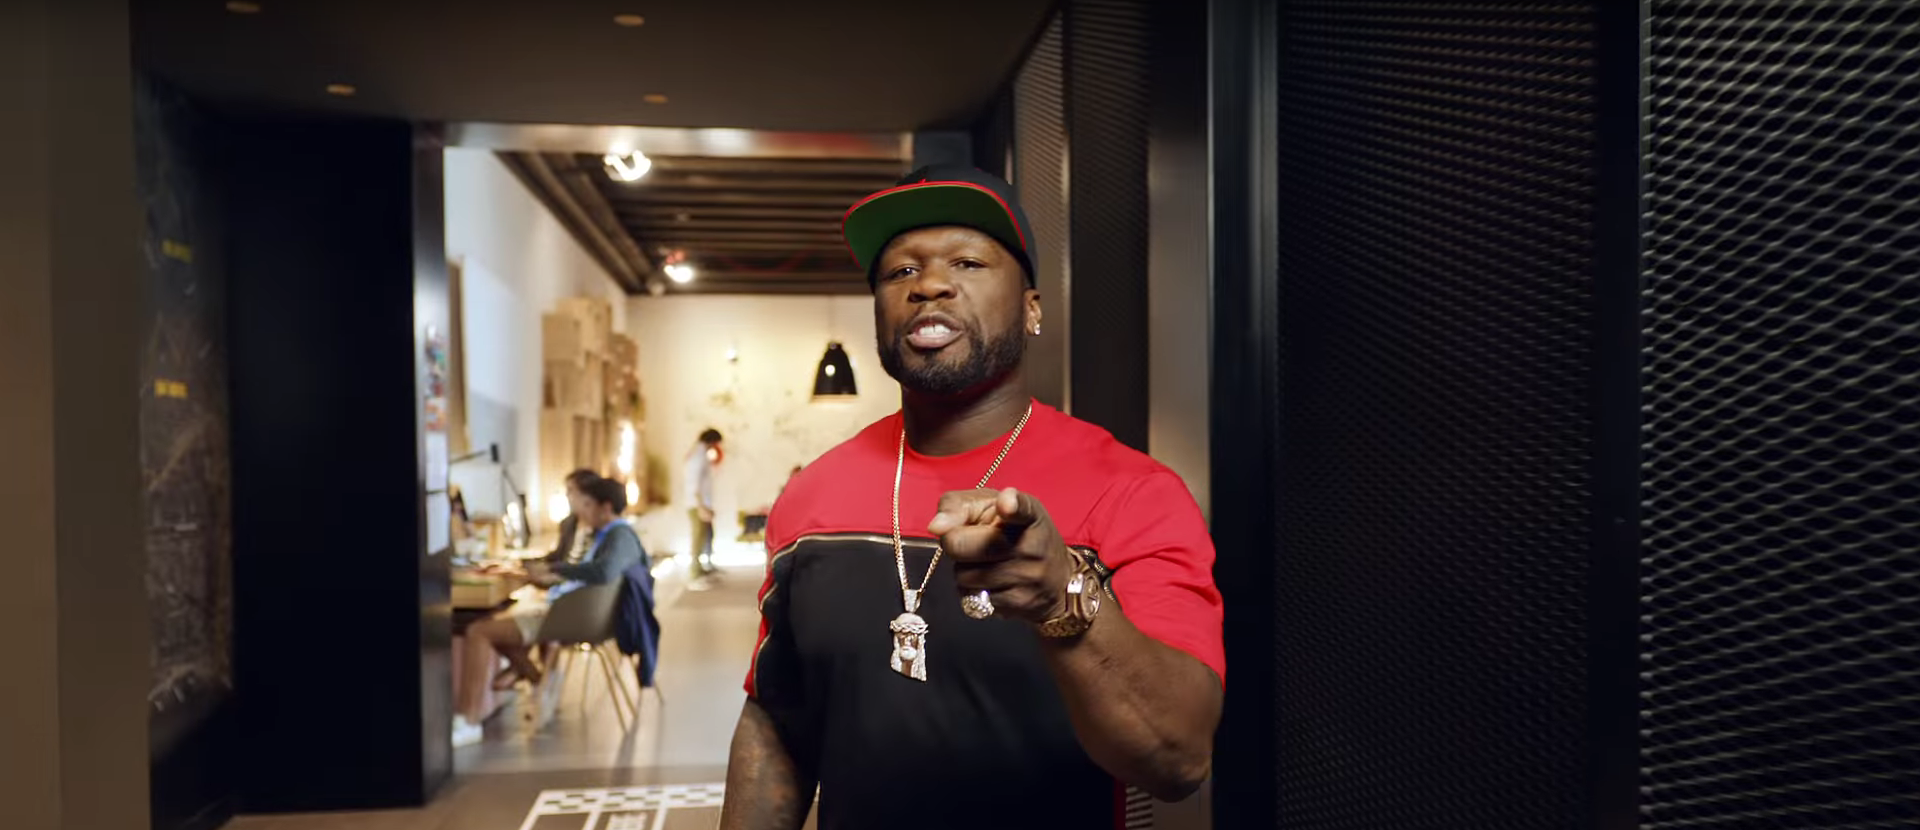 Hostellin' statt hustlin': 50 Cent s neuer Werbecoup